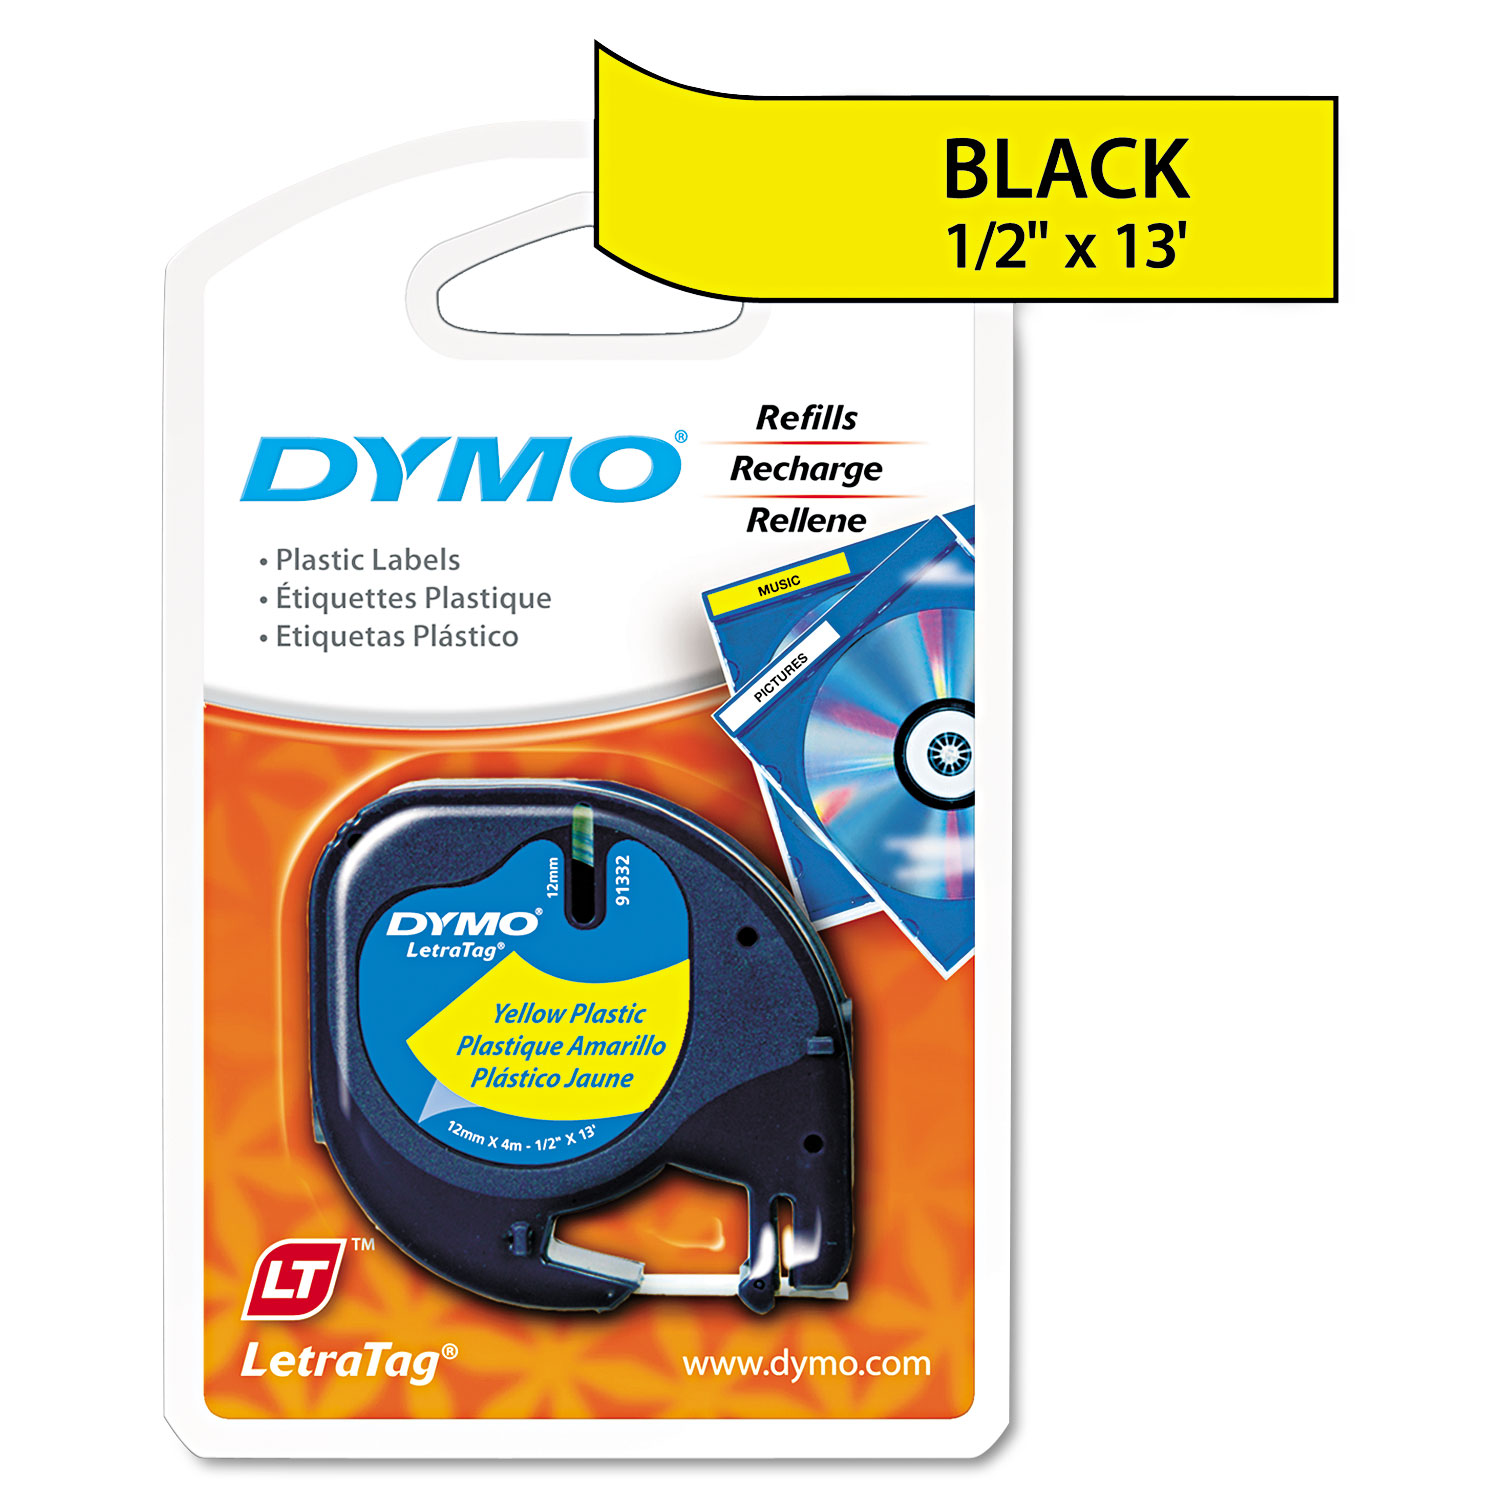 DYMO DYM91332 LetraTag Plastic Label Tape Cassette, 1/2" x 13ft, Yellow